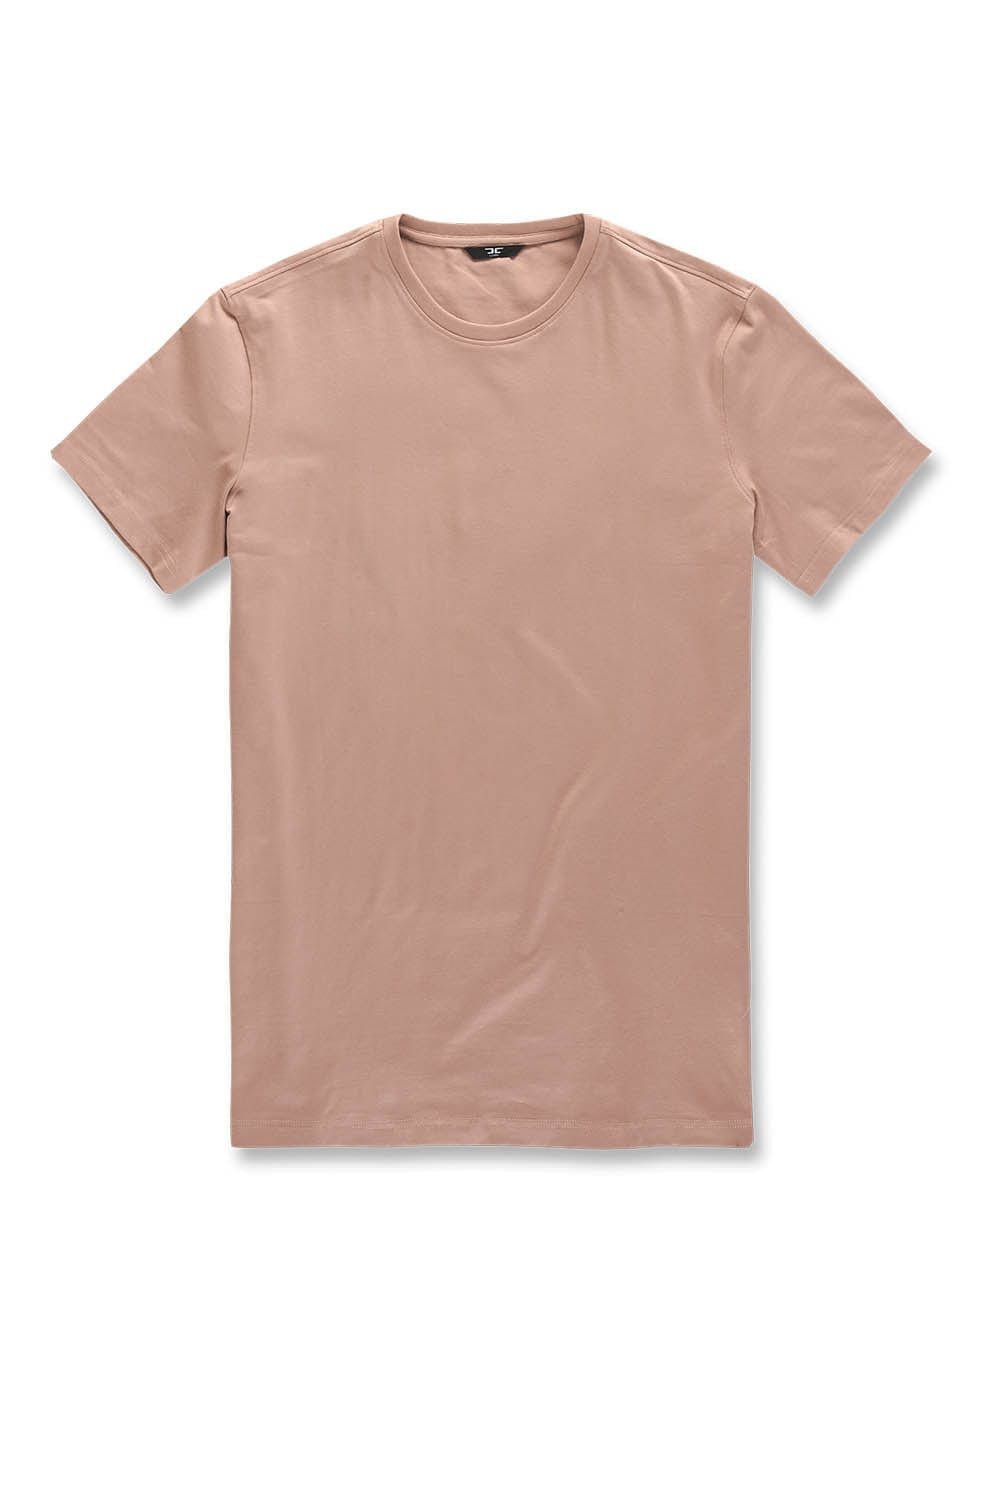 Jordan Craig Premium Crewneck T-Shirt Dusty Rose / S